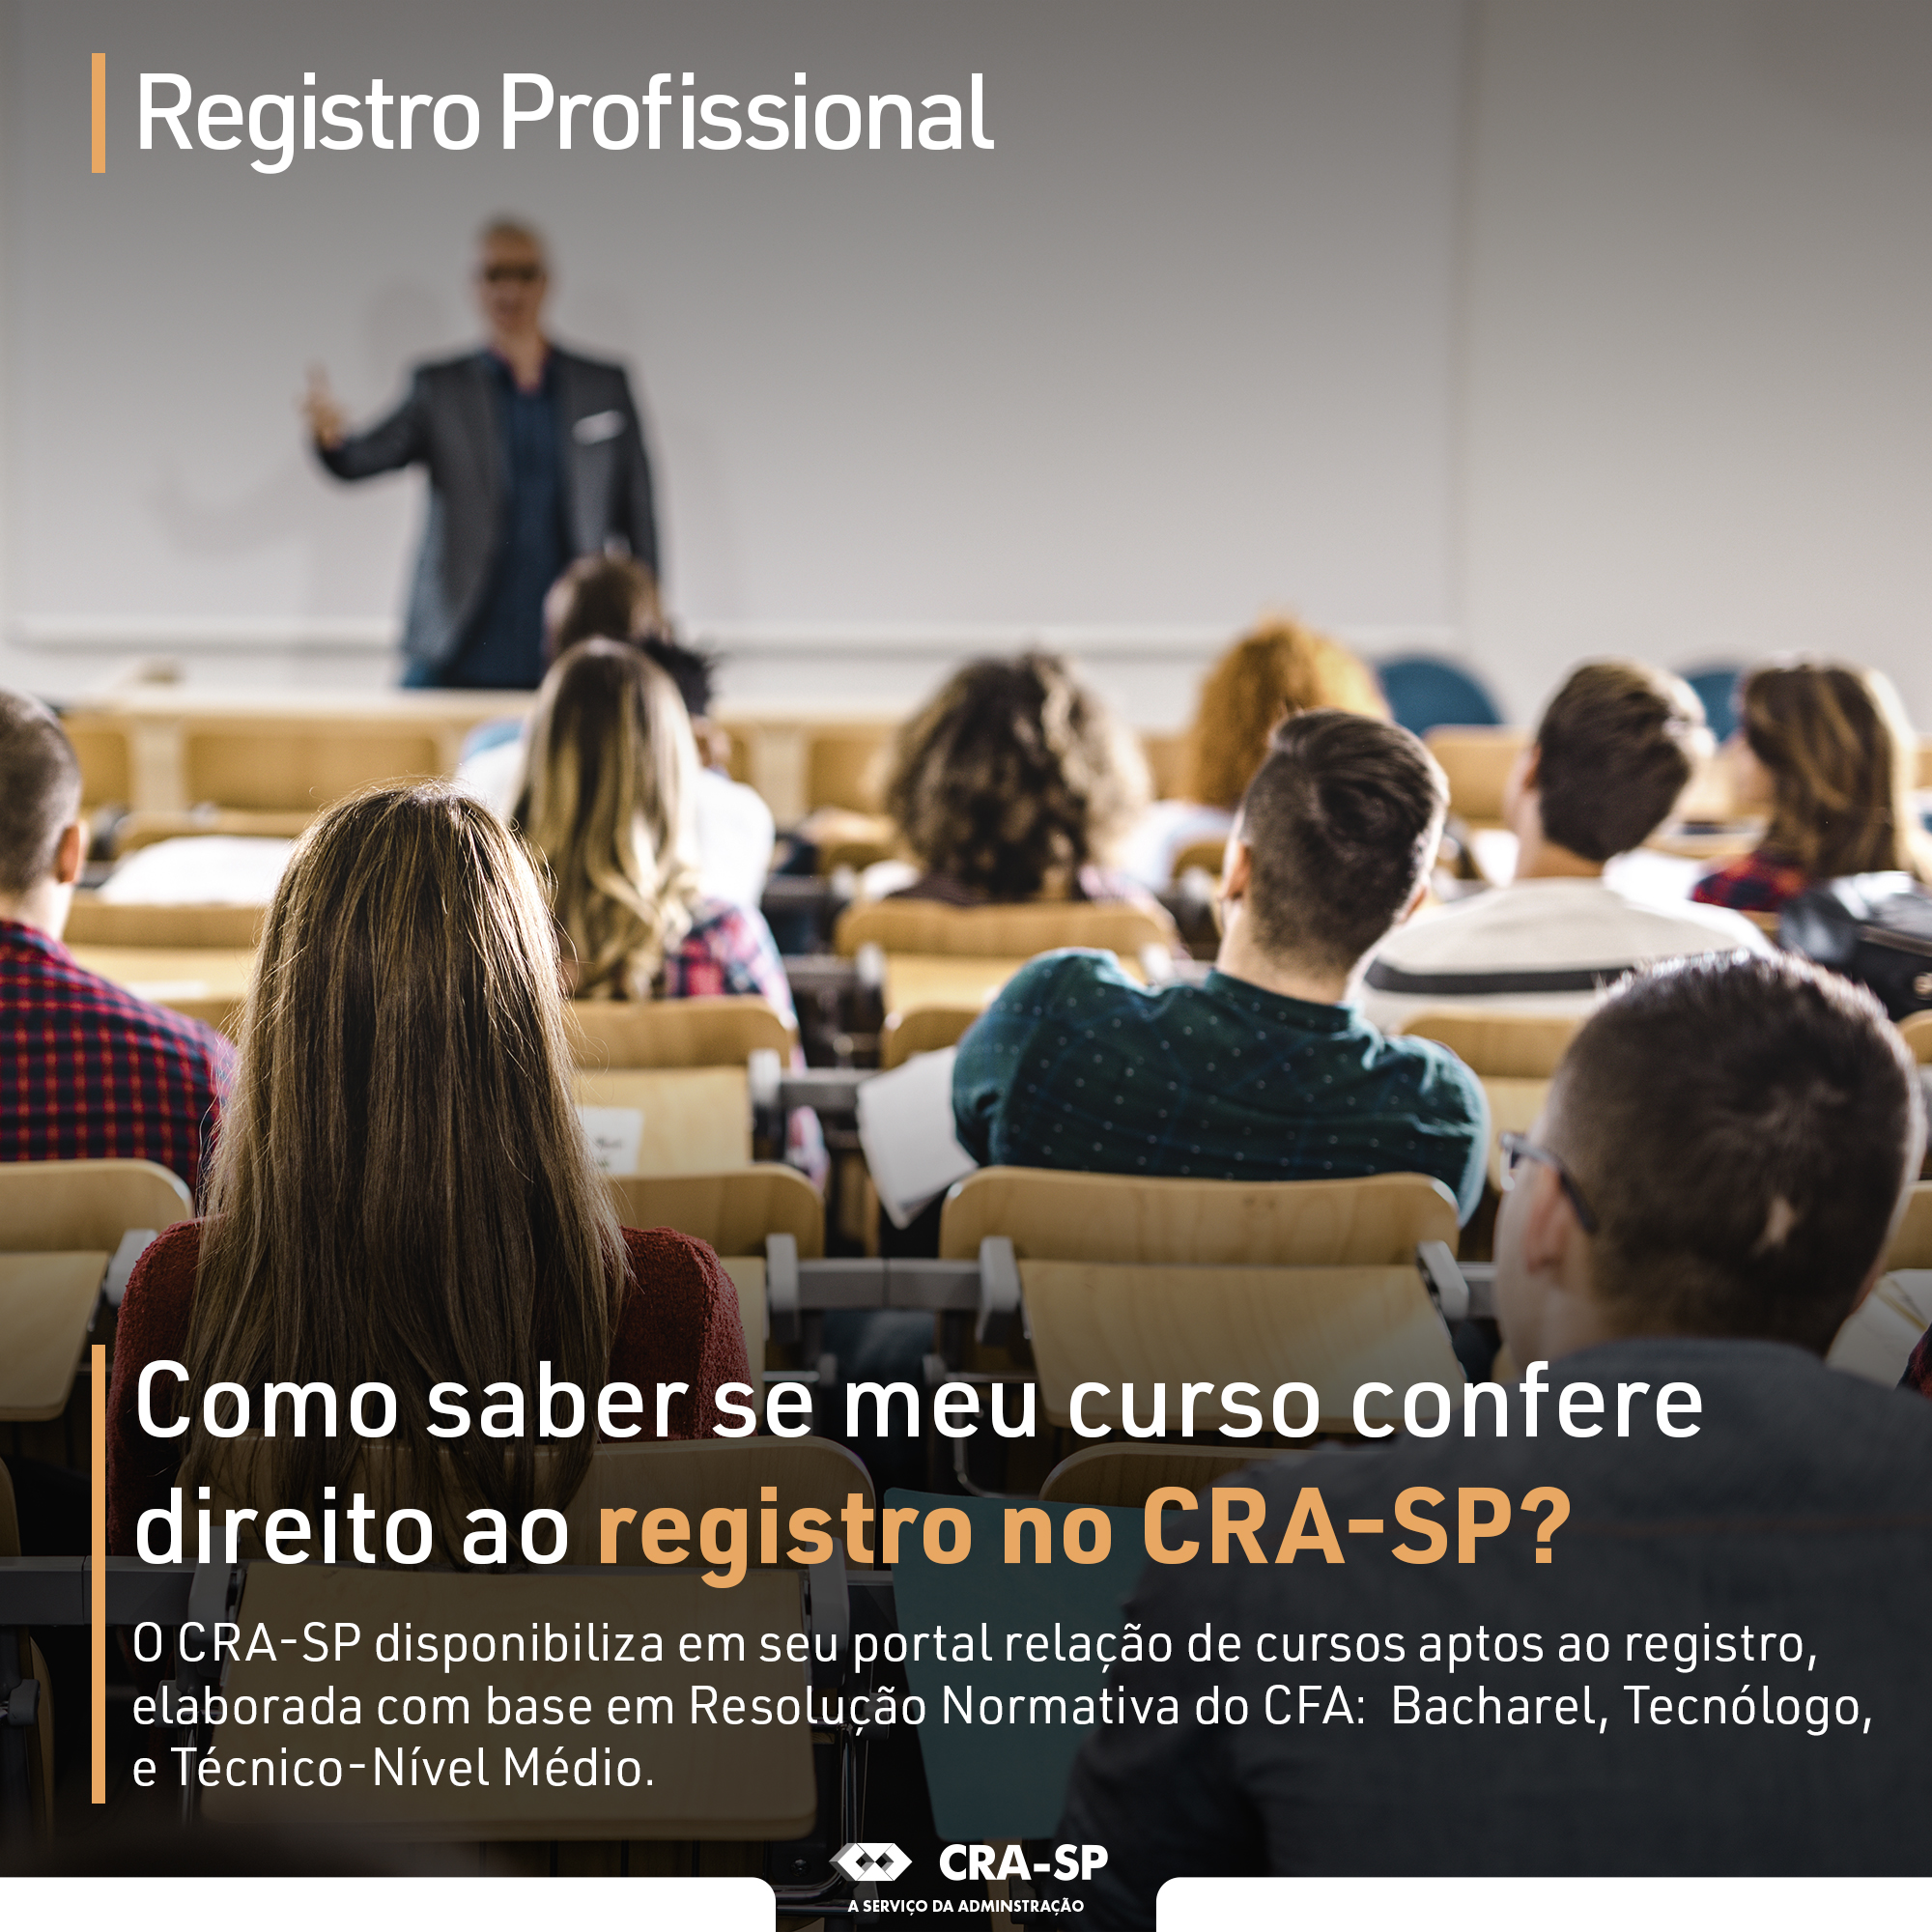 CRA-PA disponibiliza o Registro para Estudantes - CRA-PA